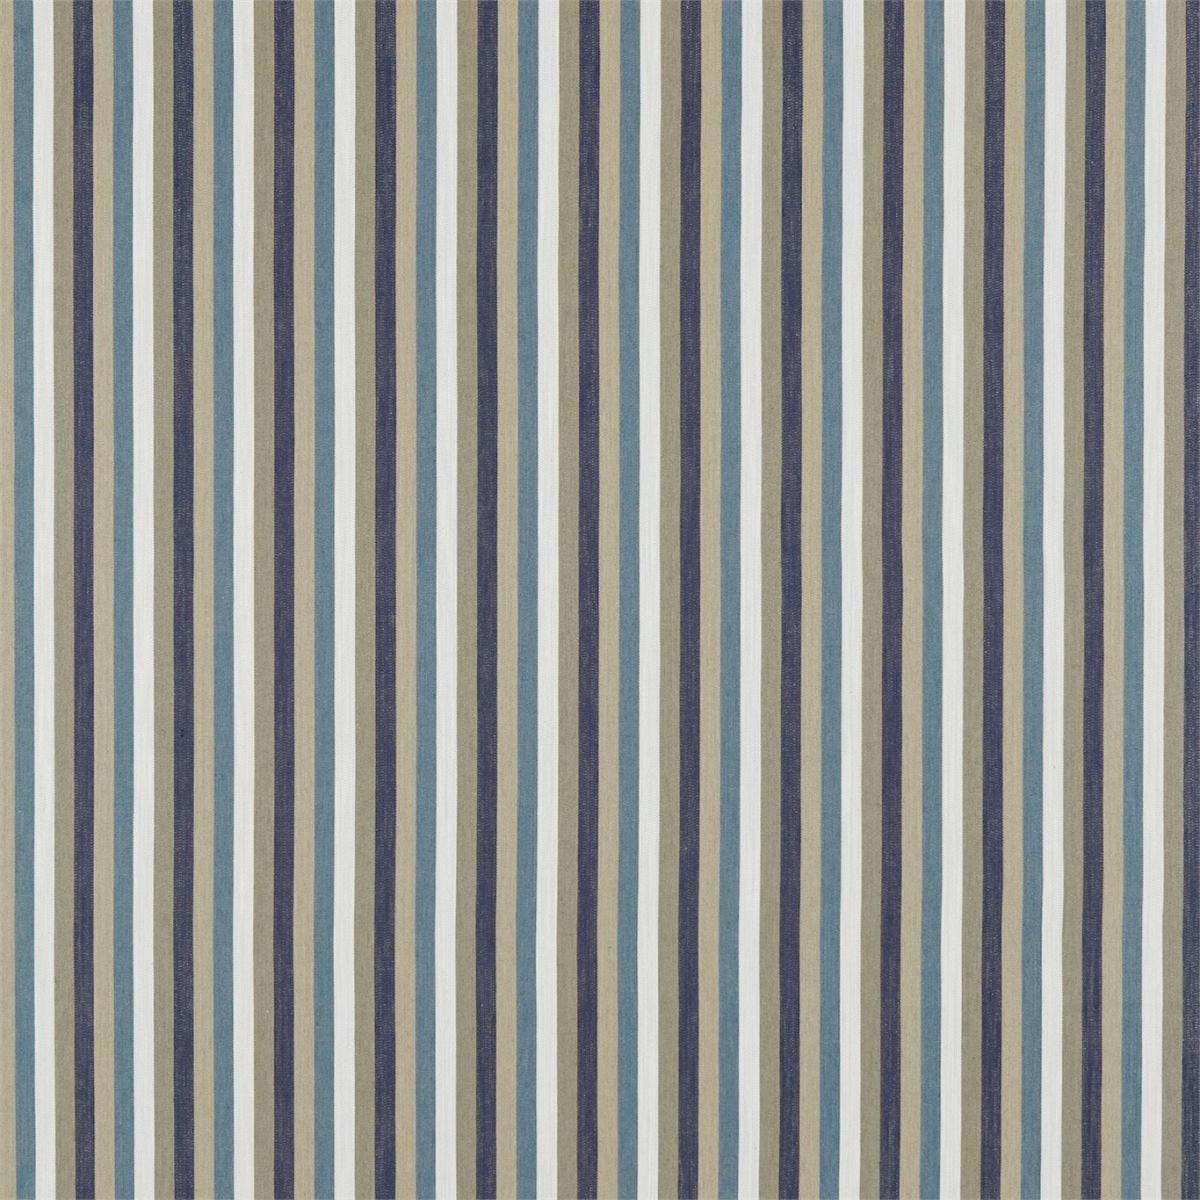 Ткань Zoffany Roman Stripes Weaves 330025 